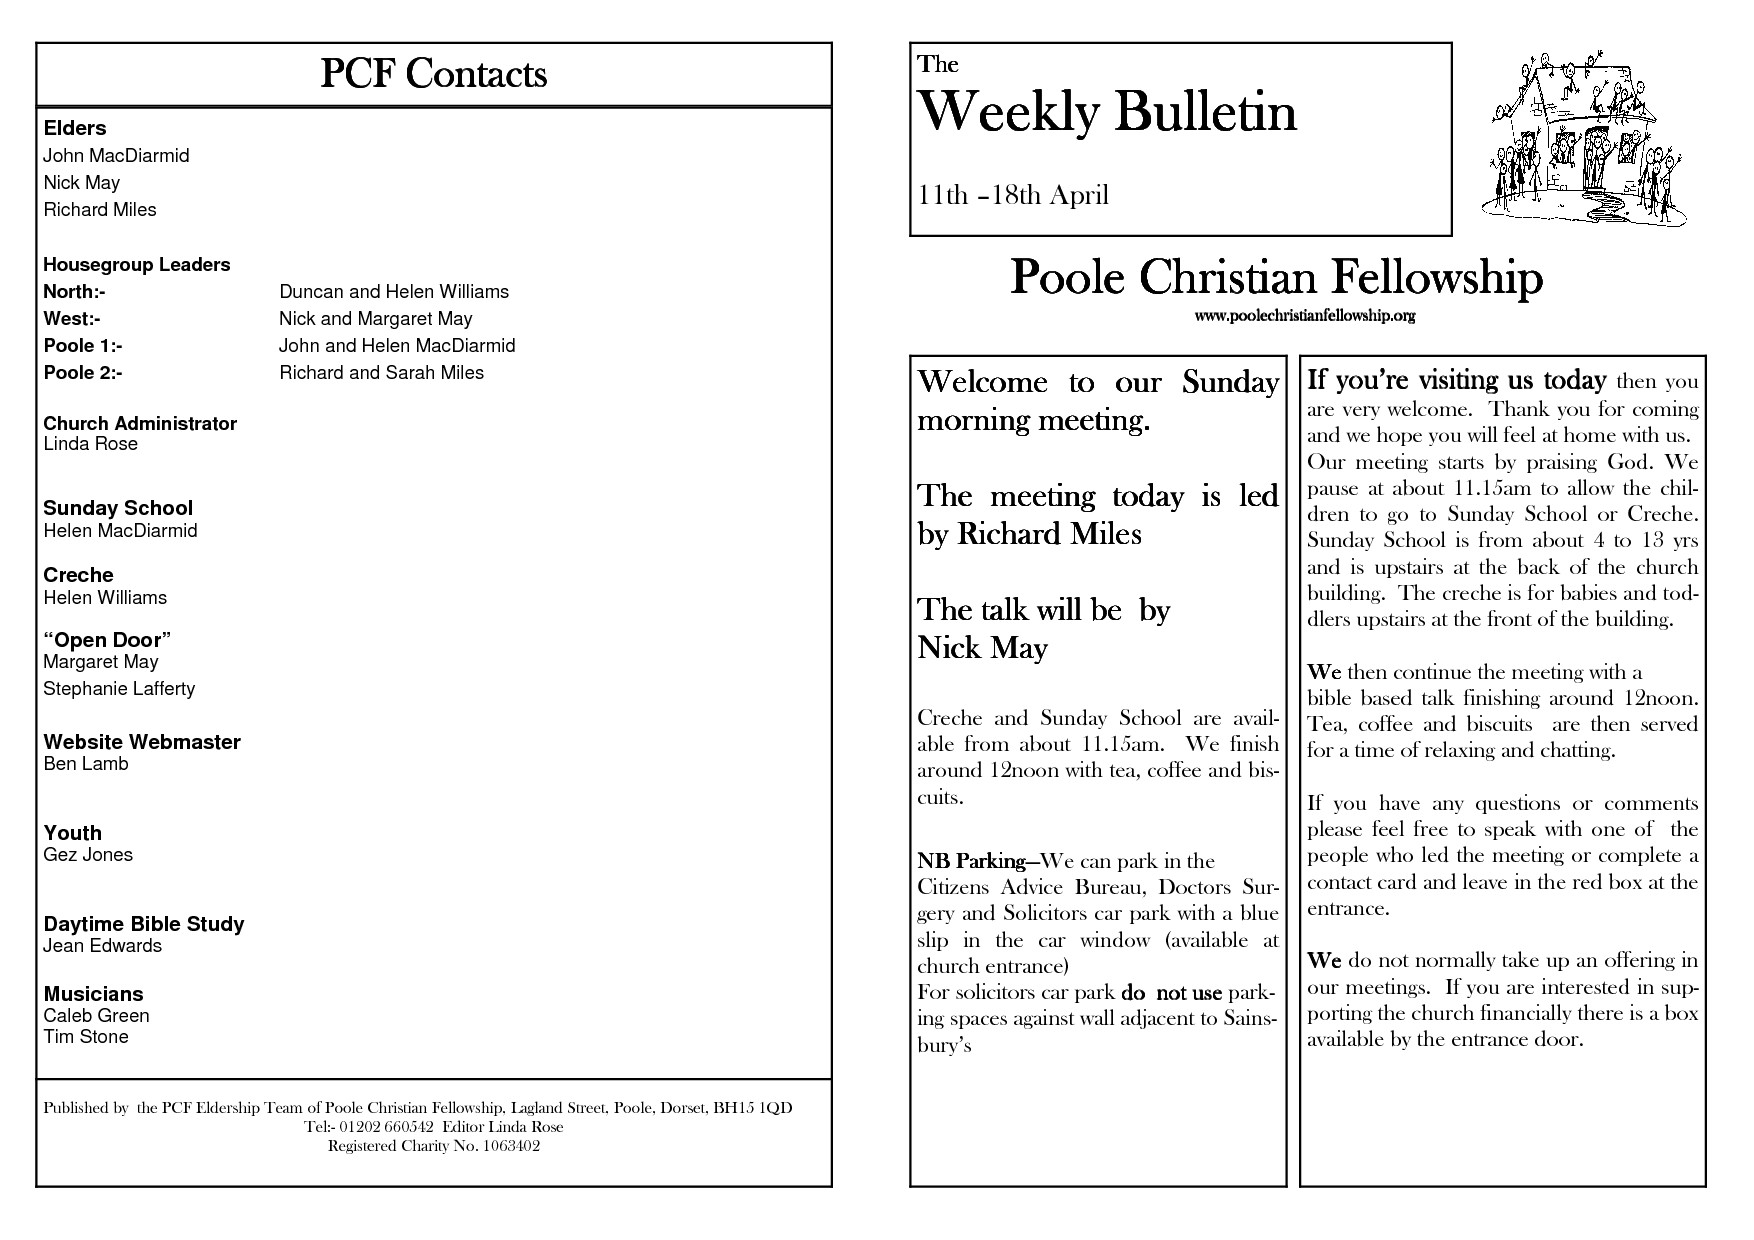 30 Free Printable Church Bulletin Templates